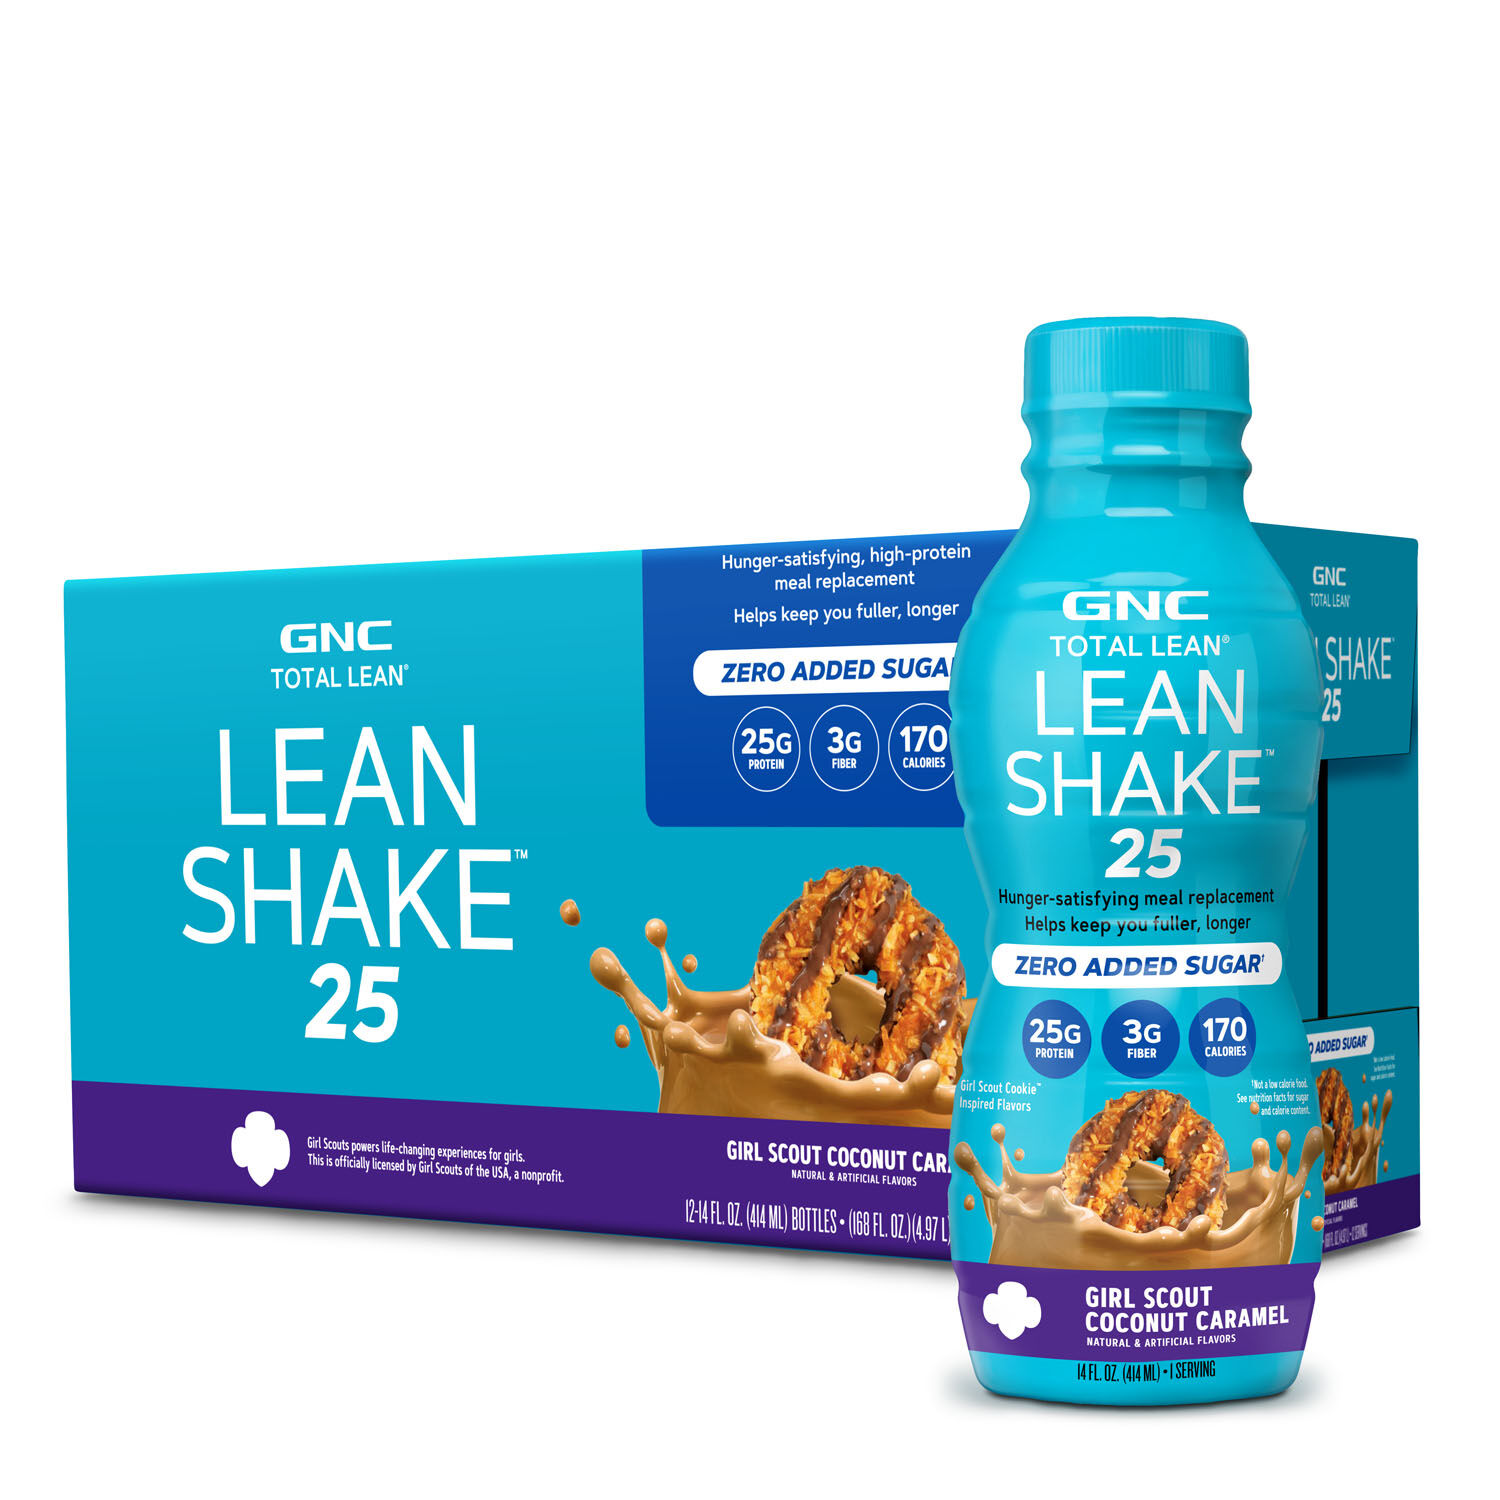 15-gnc-lean-shake-25-nutrition-facts